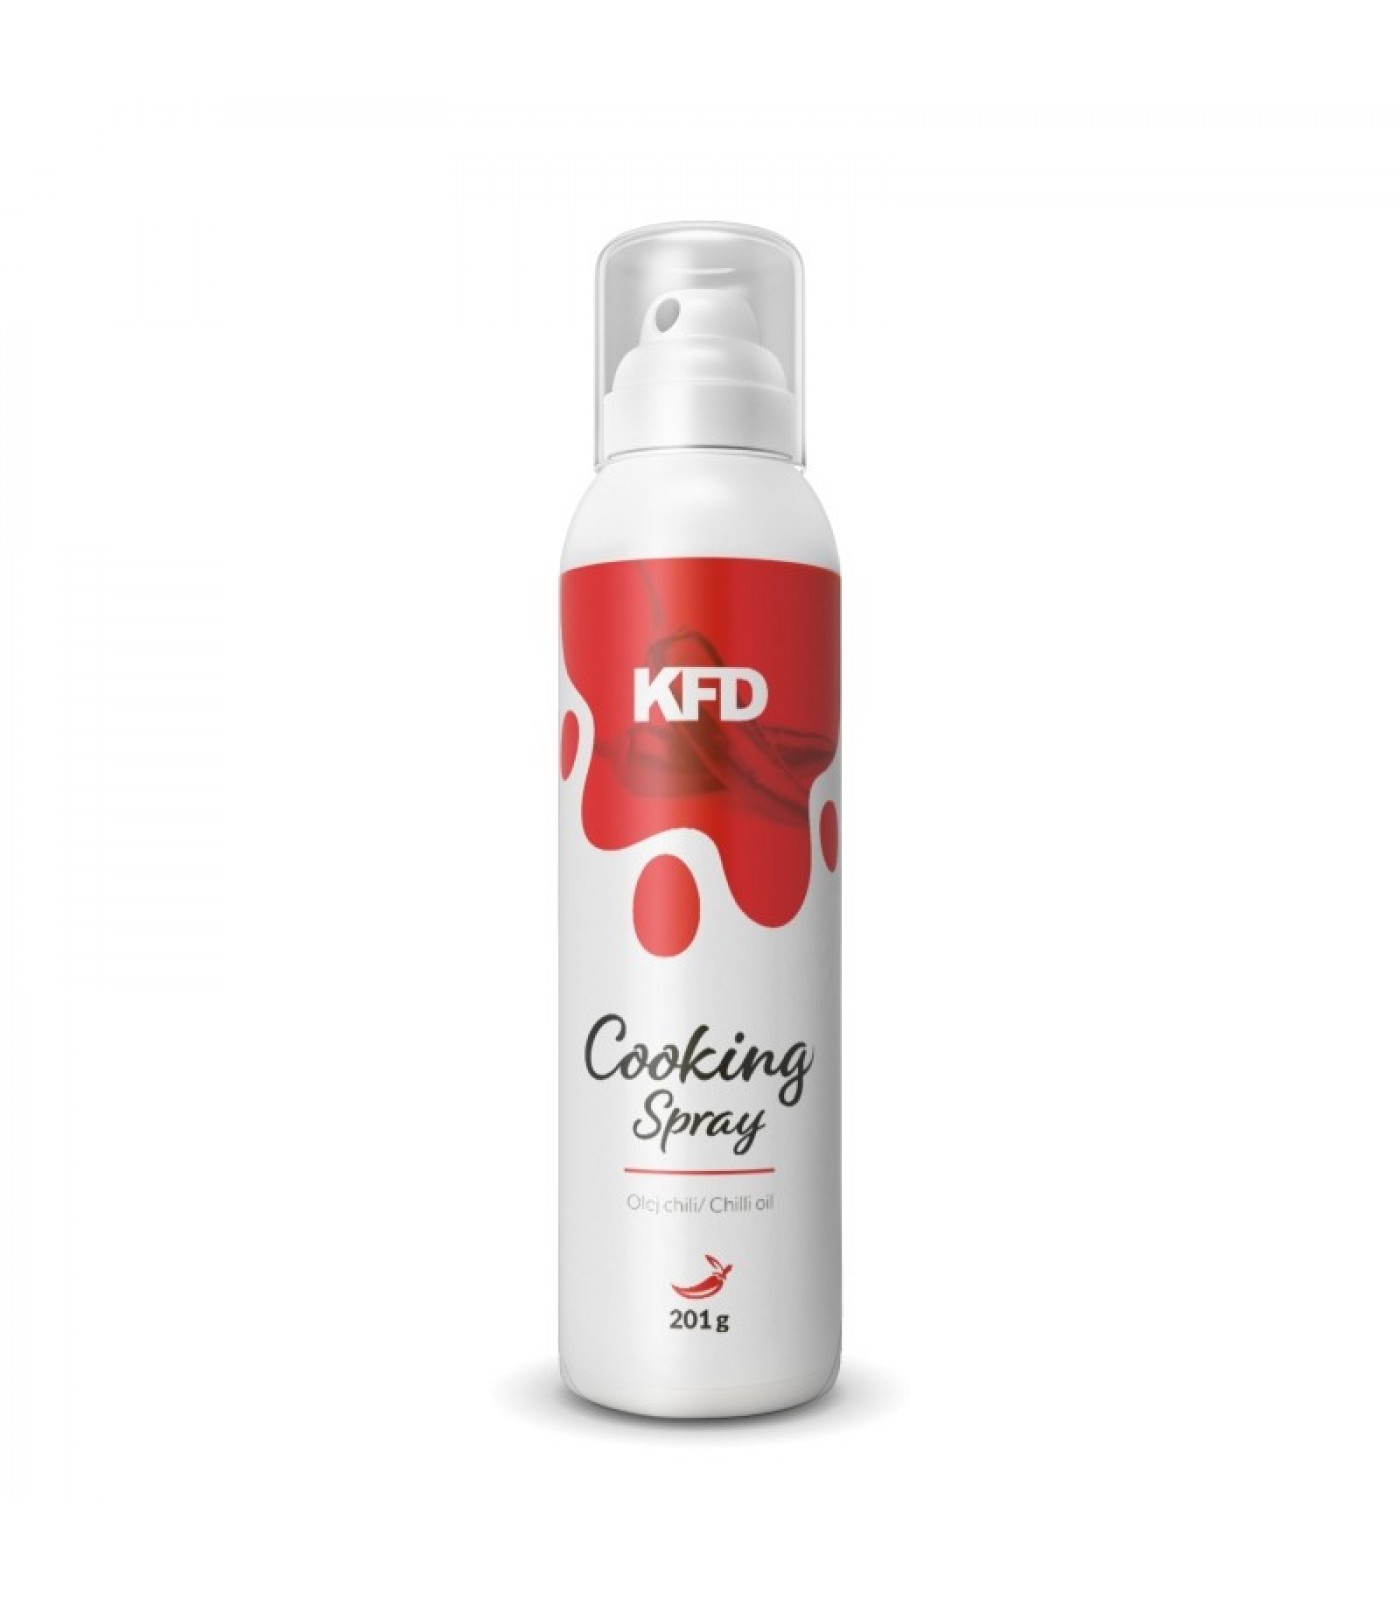 KFD Cooking Spray - Chilli